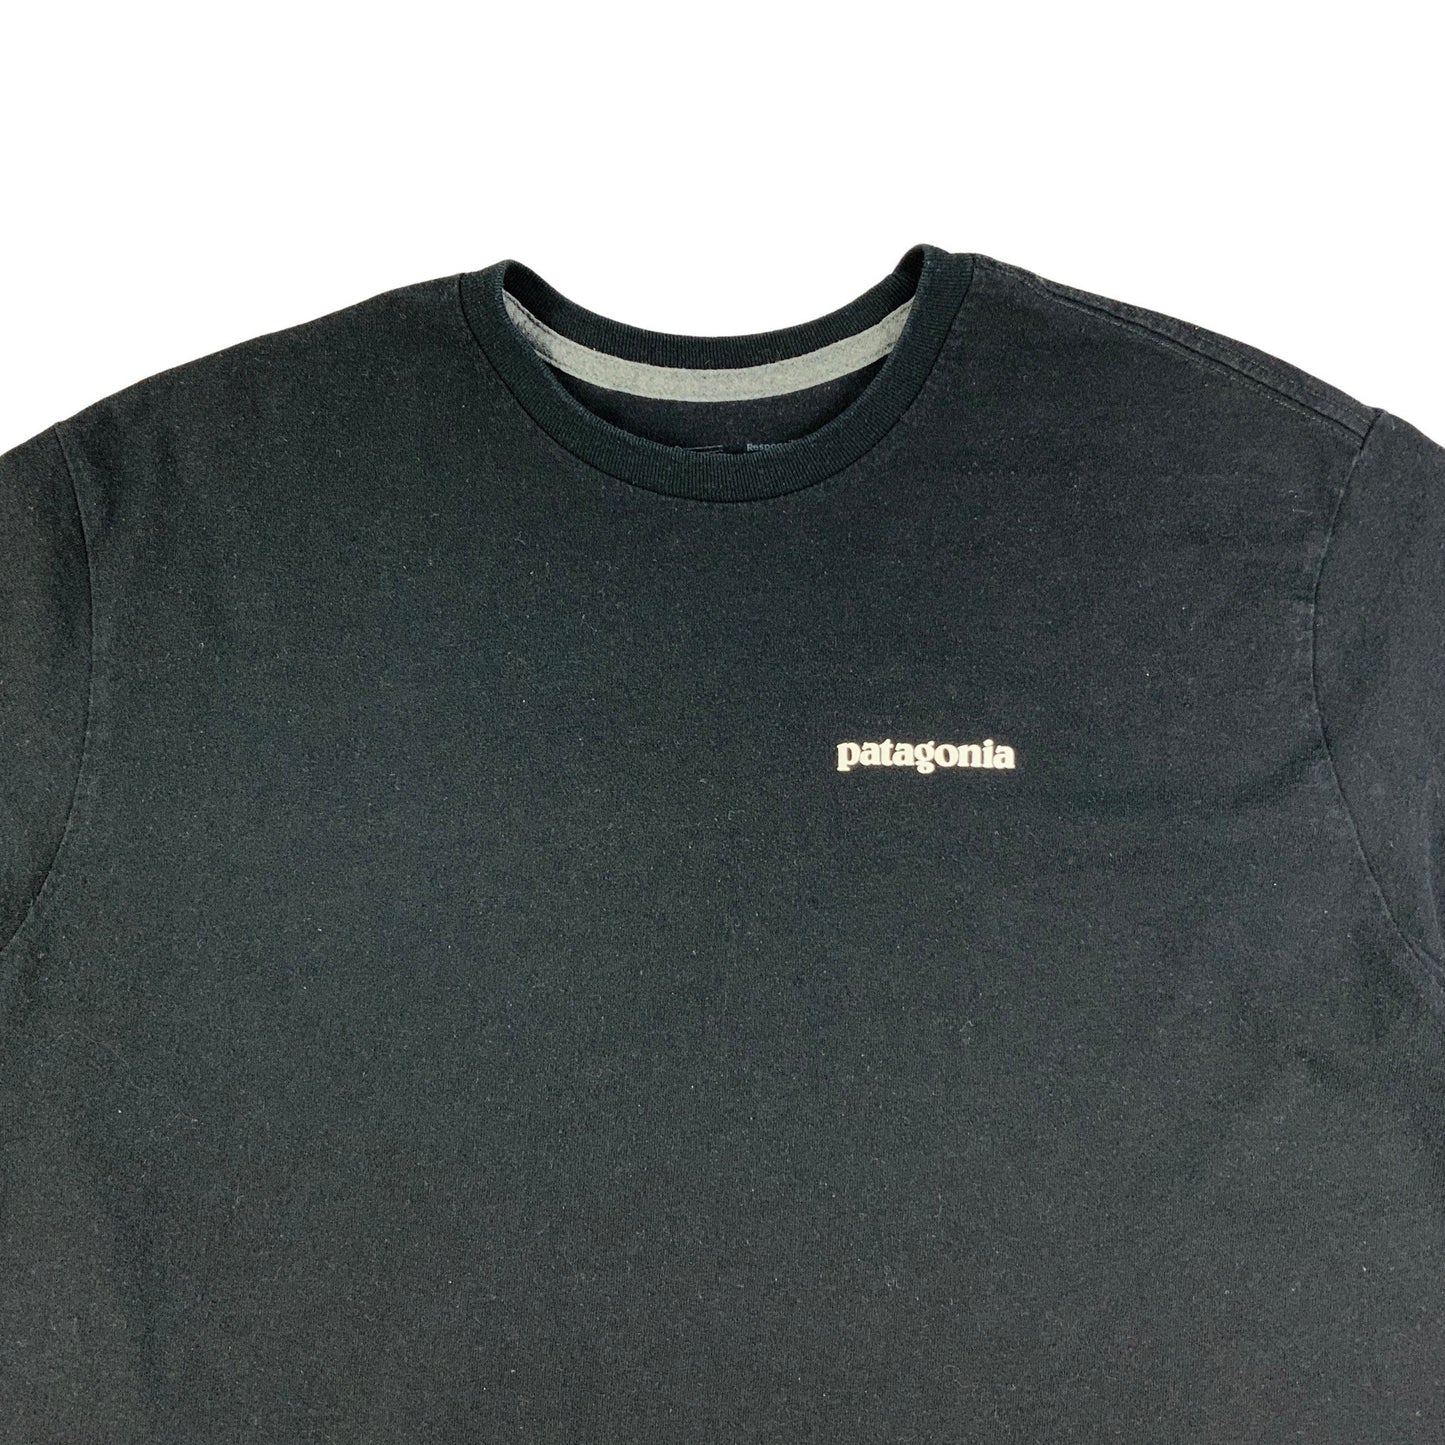 Patagonia Black Tee T-Shirt M L